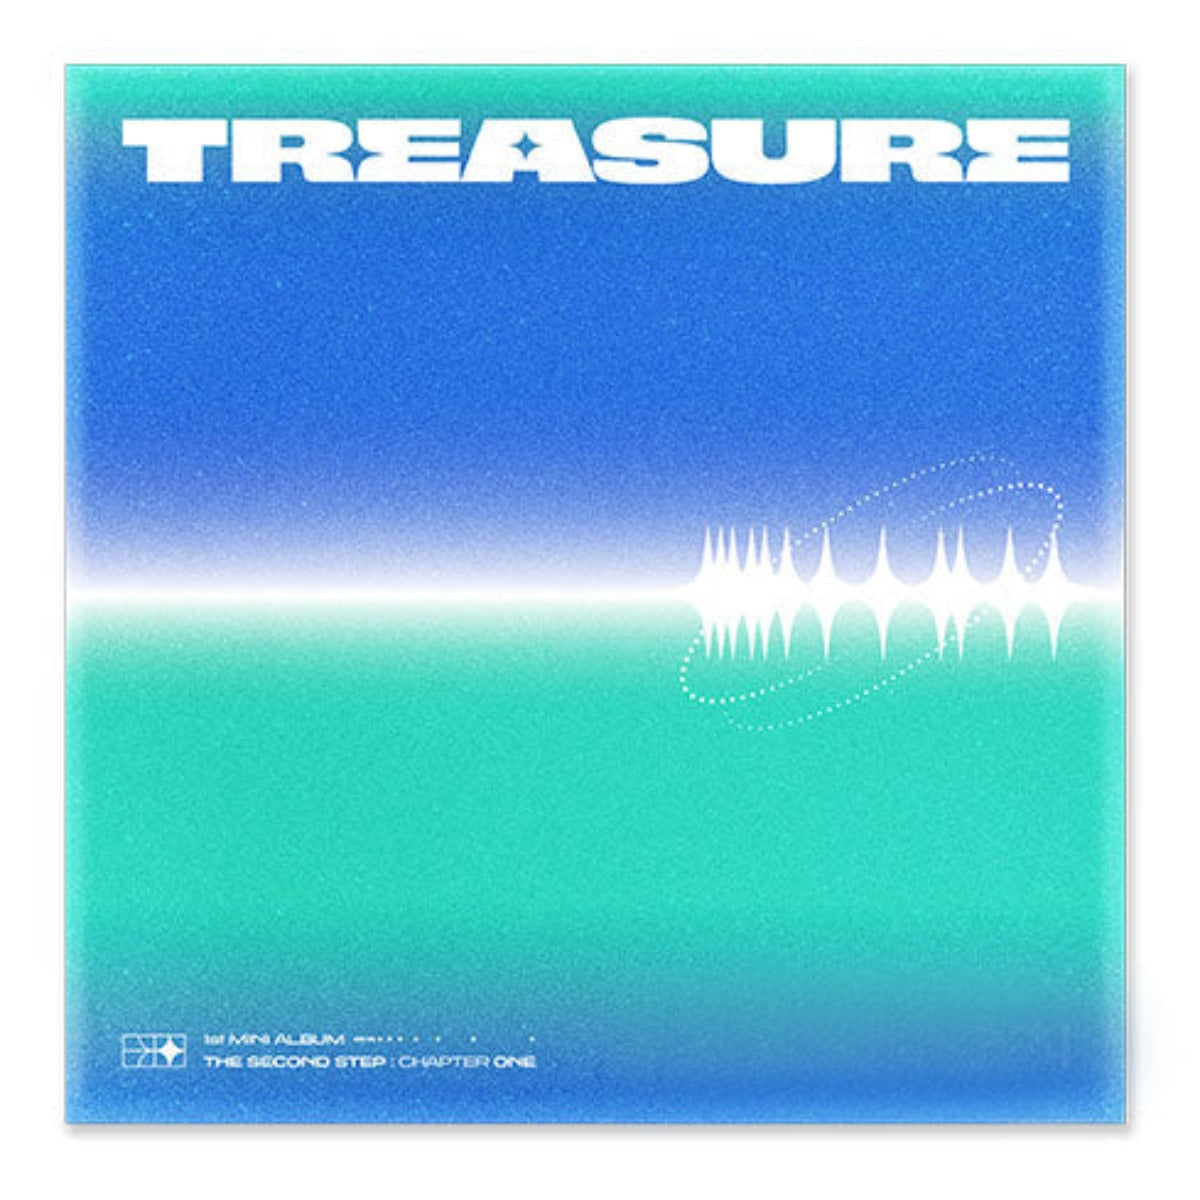 TREASURE Mini Album Vol. 1 - The Second Step : Chapter One (Digipack Version) (Random Version)